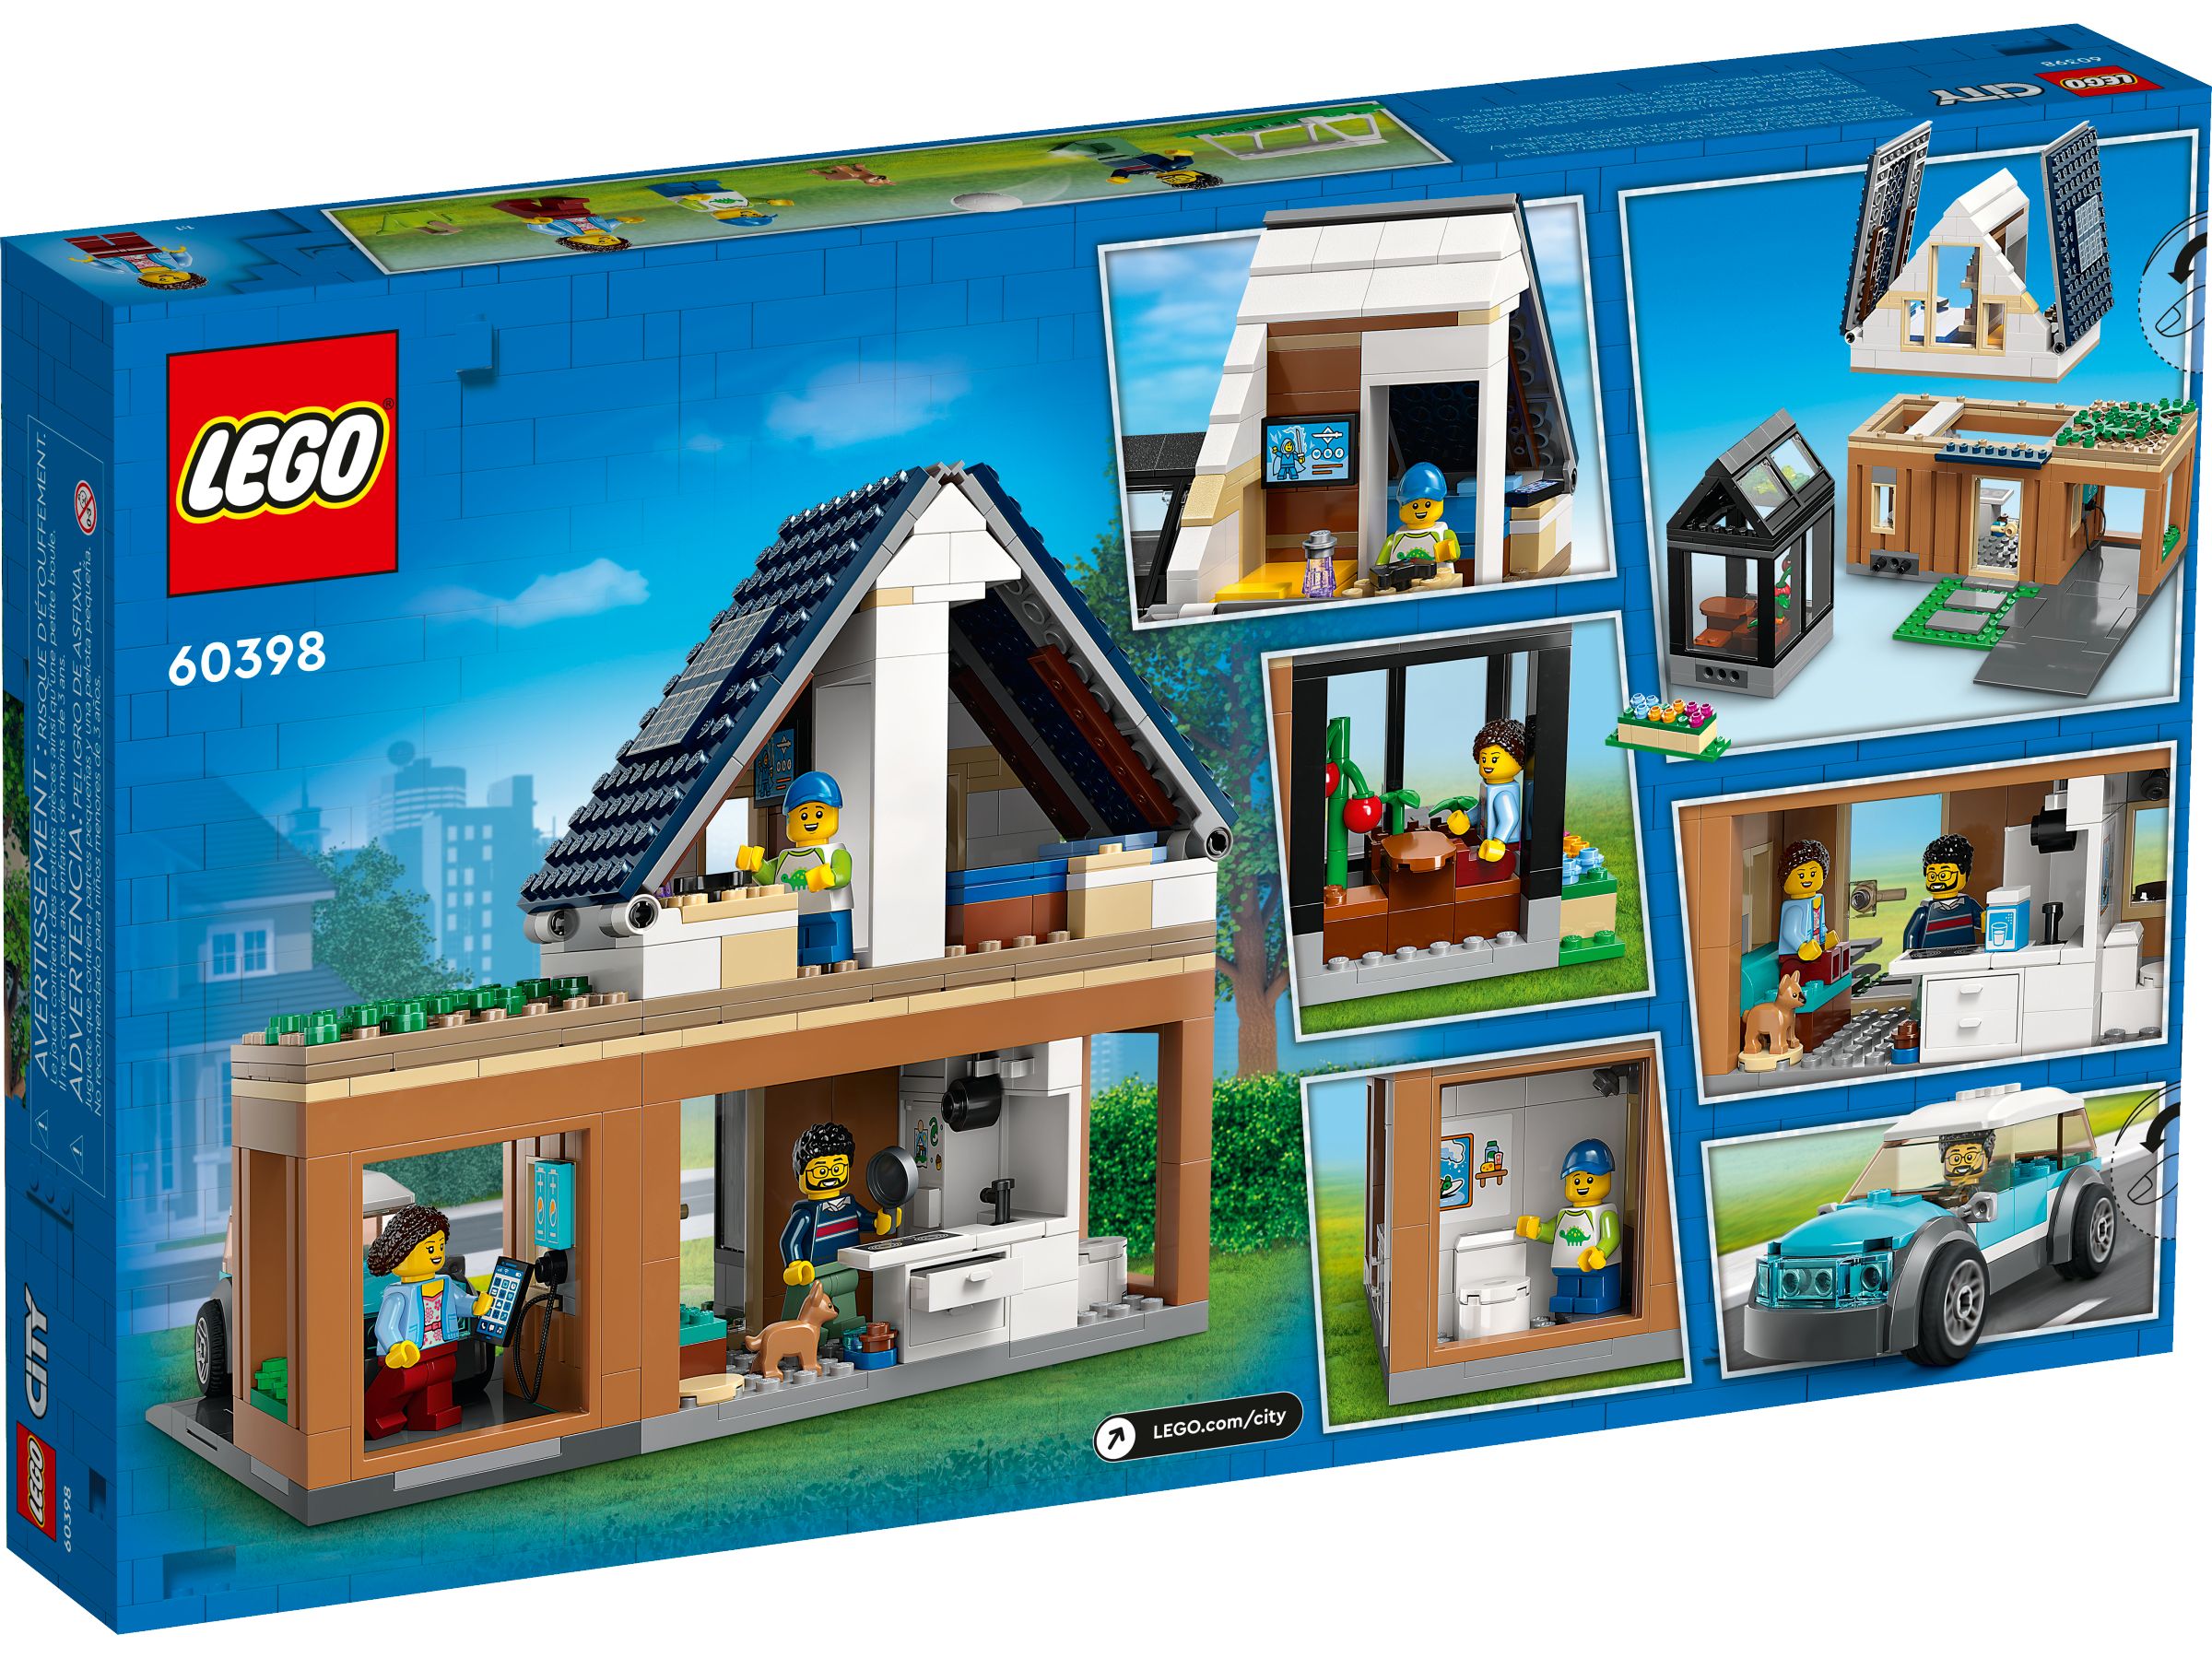 LEGO City 60398 Familienhaus mit Elektroauto LEGO_60398_alt9.jpg